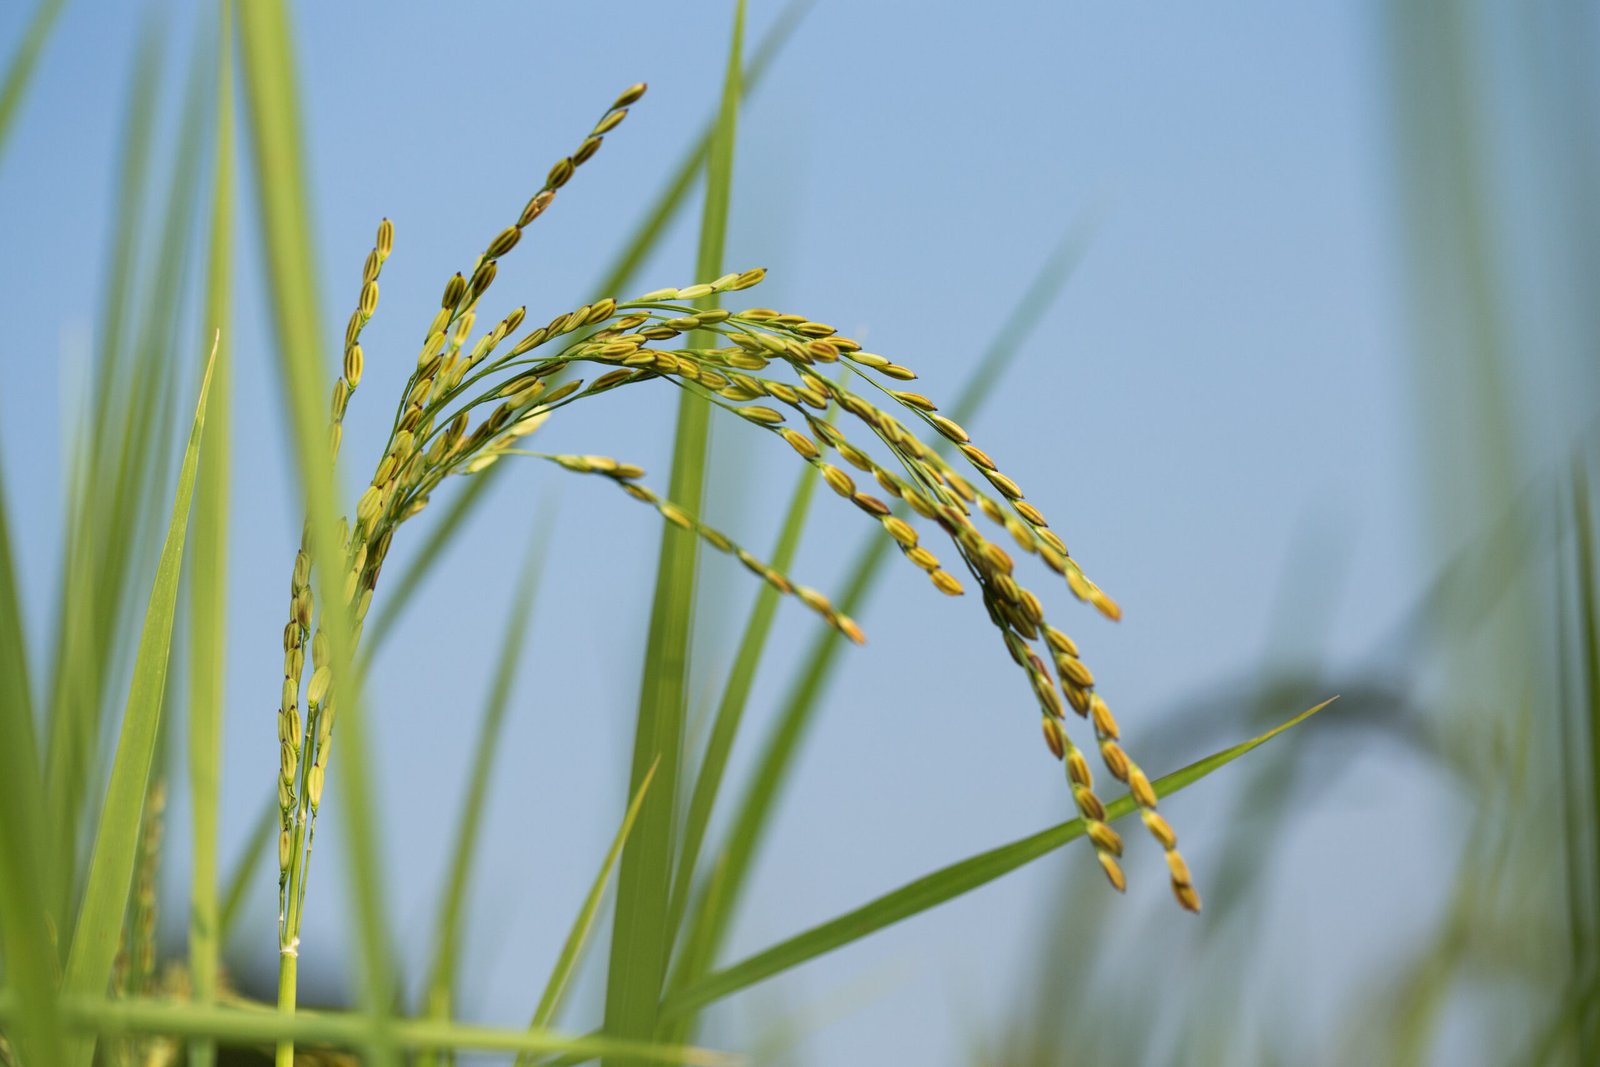 Panankattu kudaivazhai crop(2)